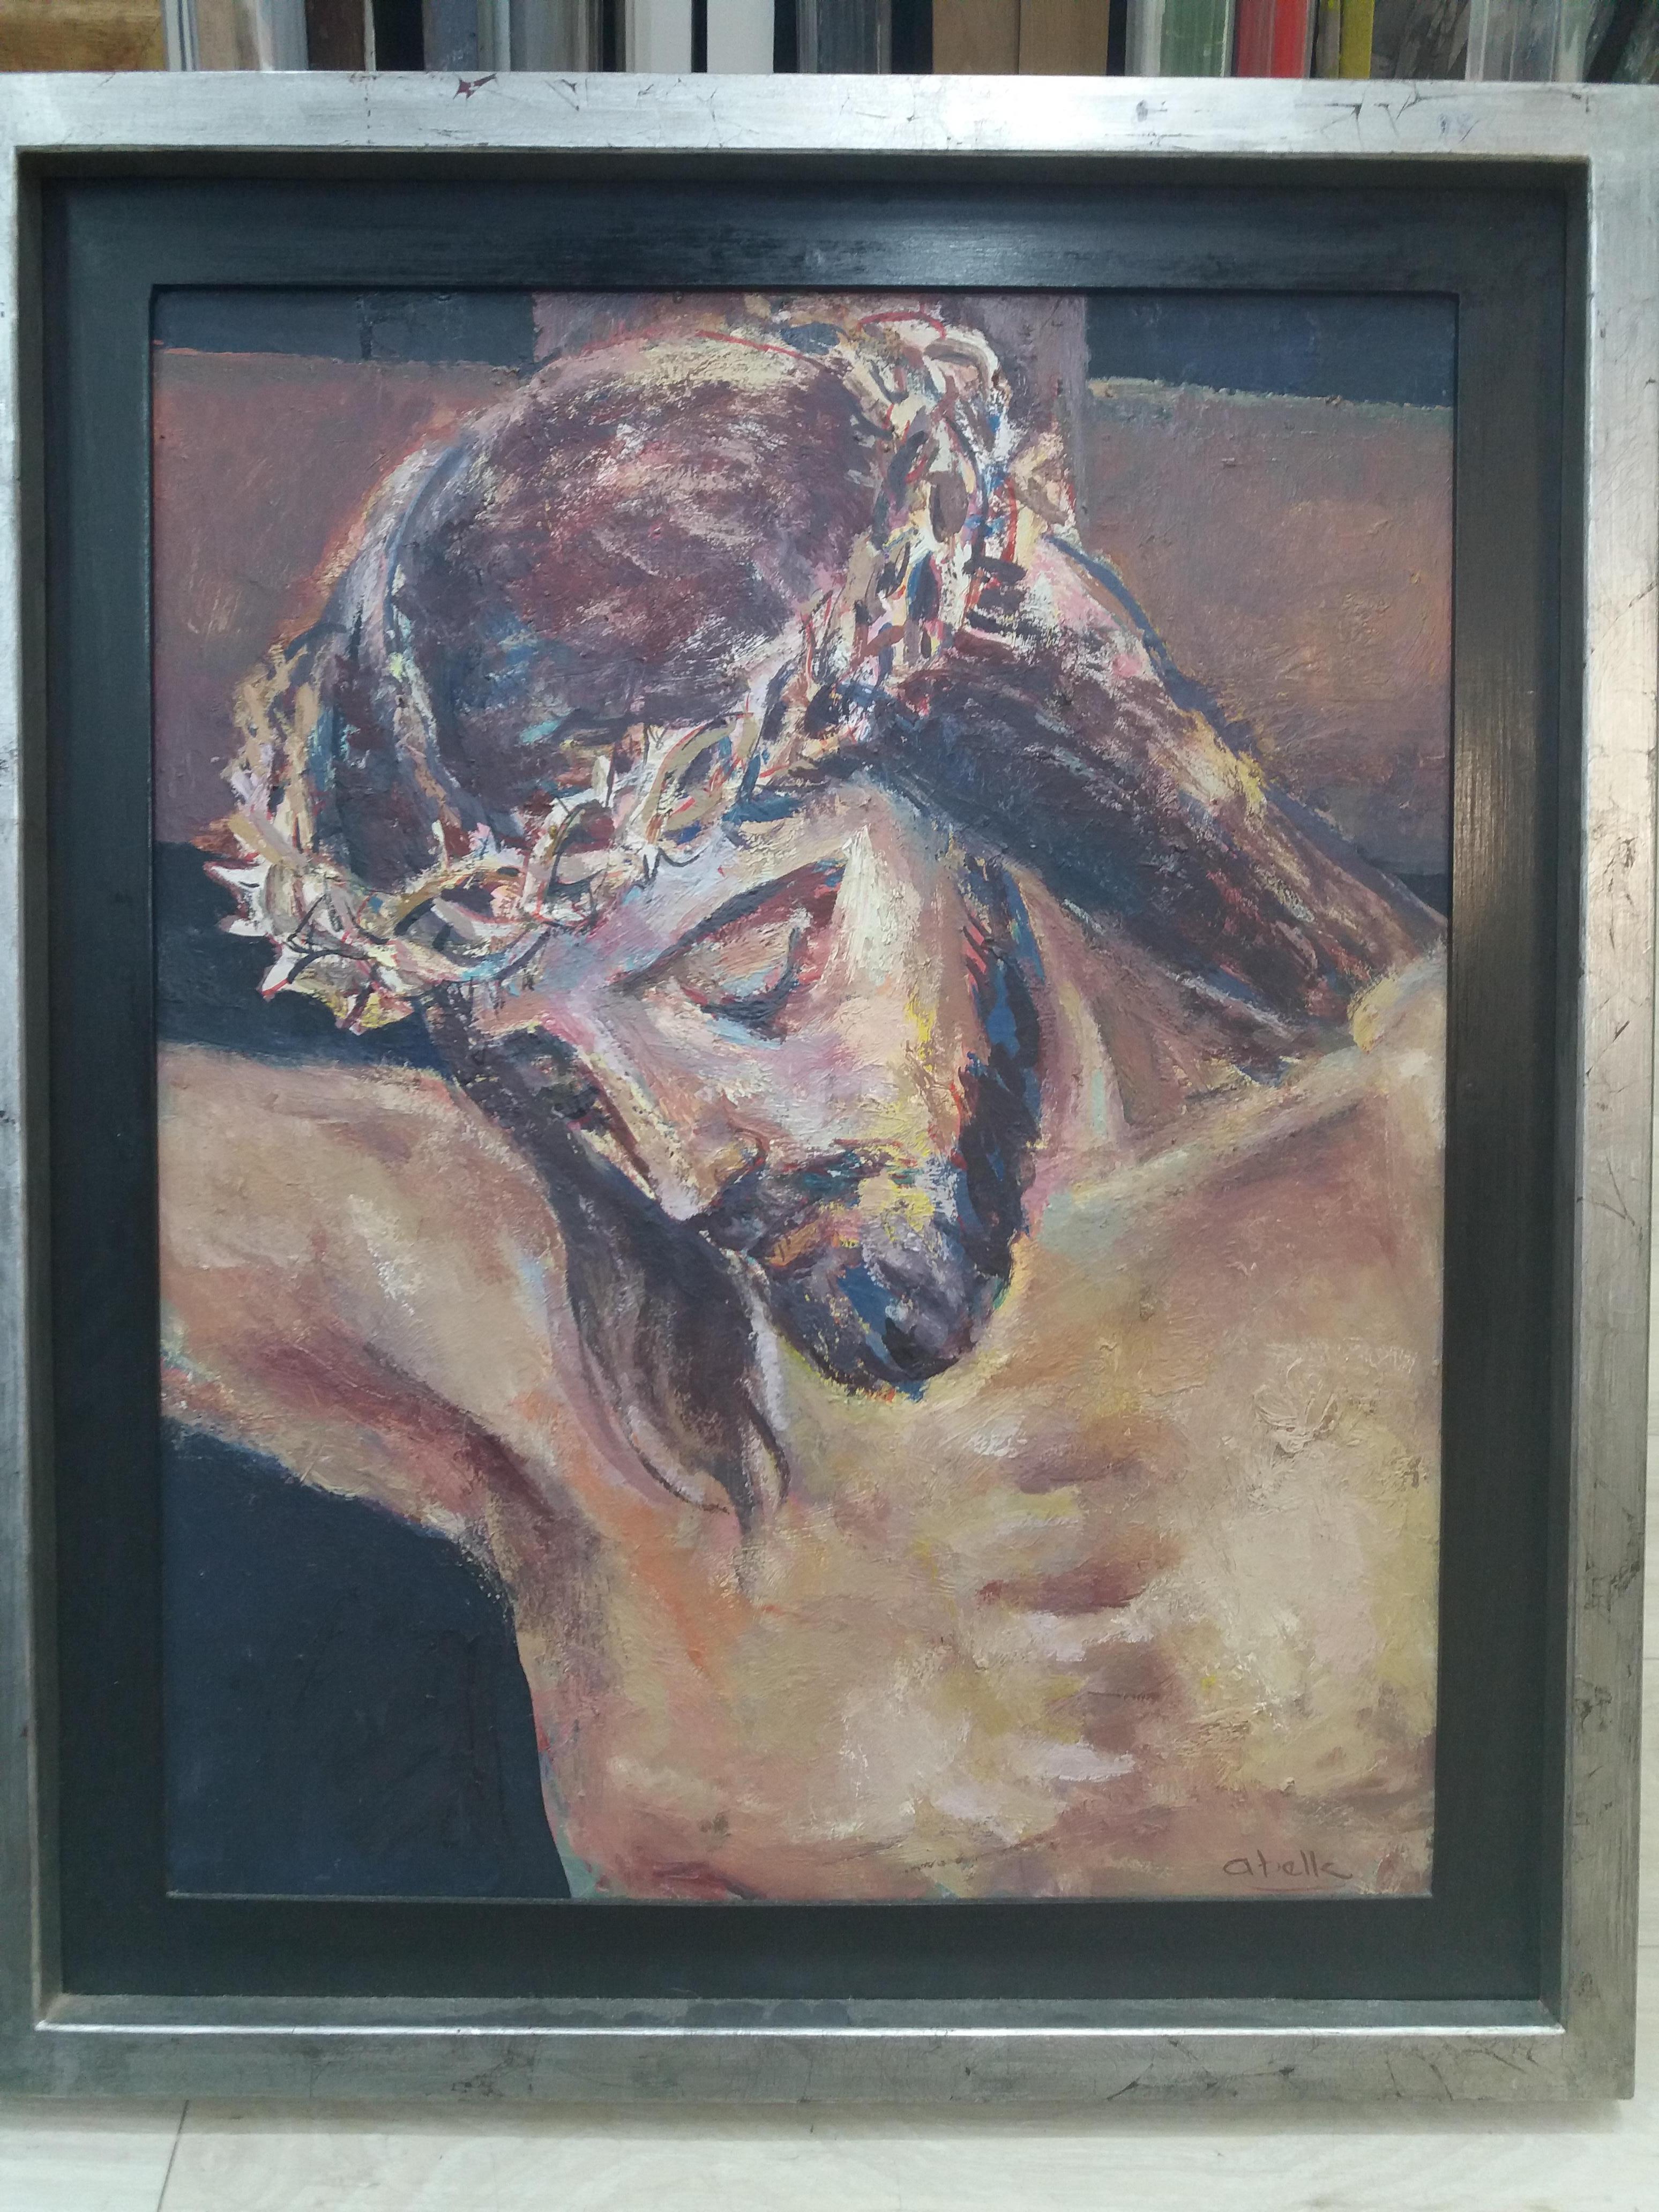  Abella, 5  Jesus Christ Religious theme. original acrylic painting